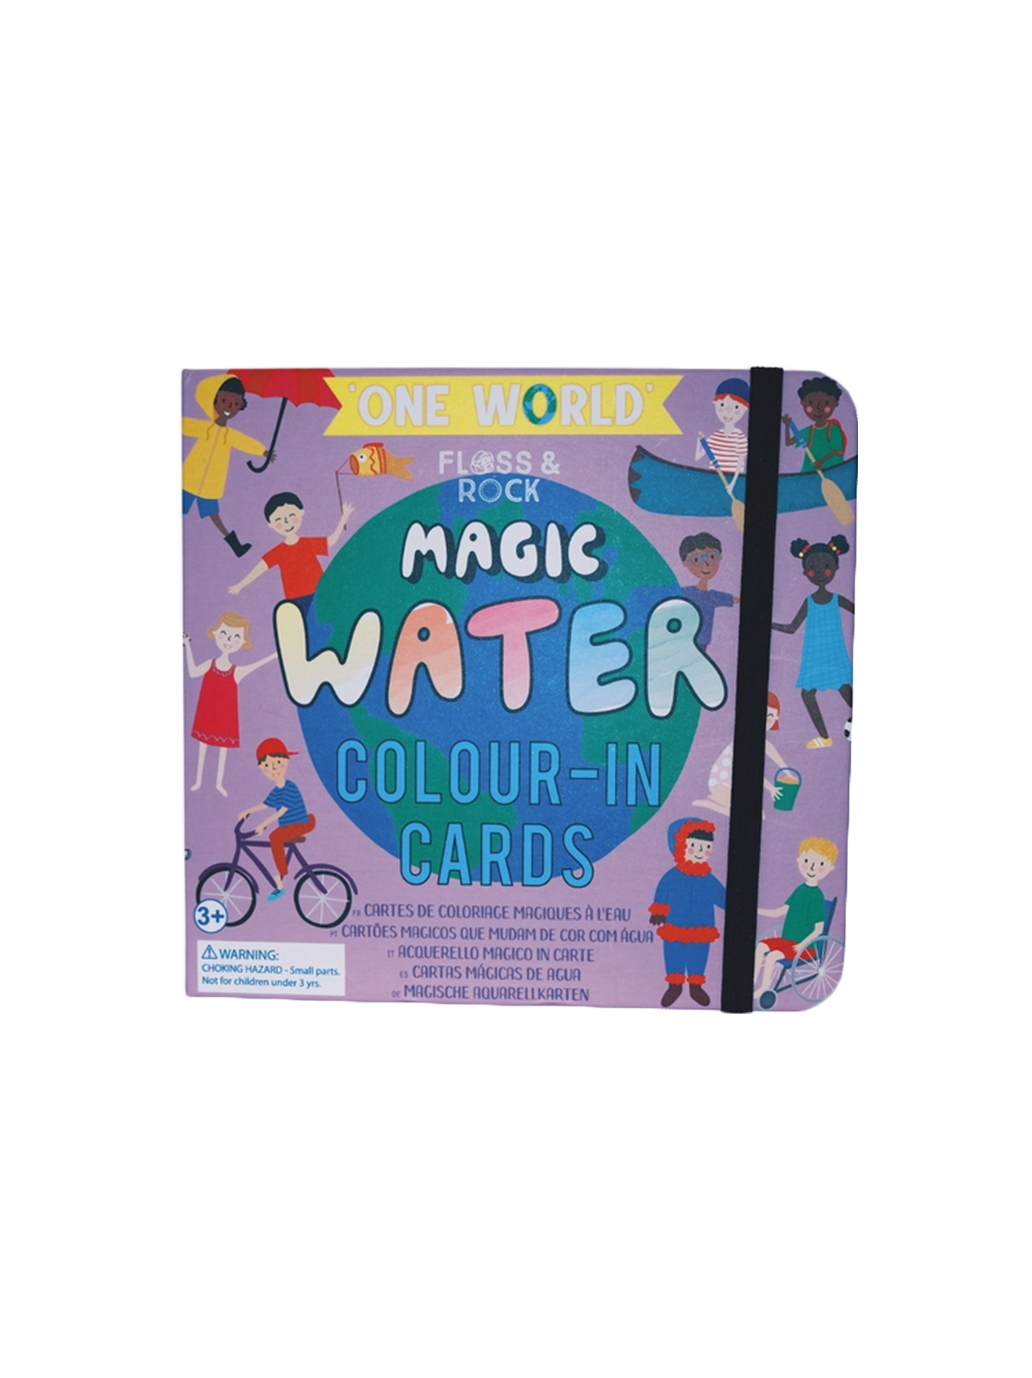 Magic water cards